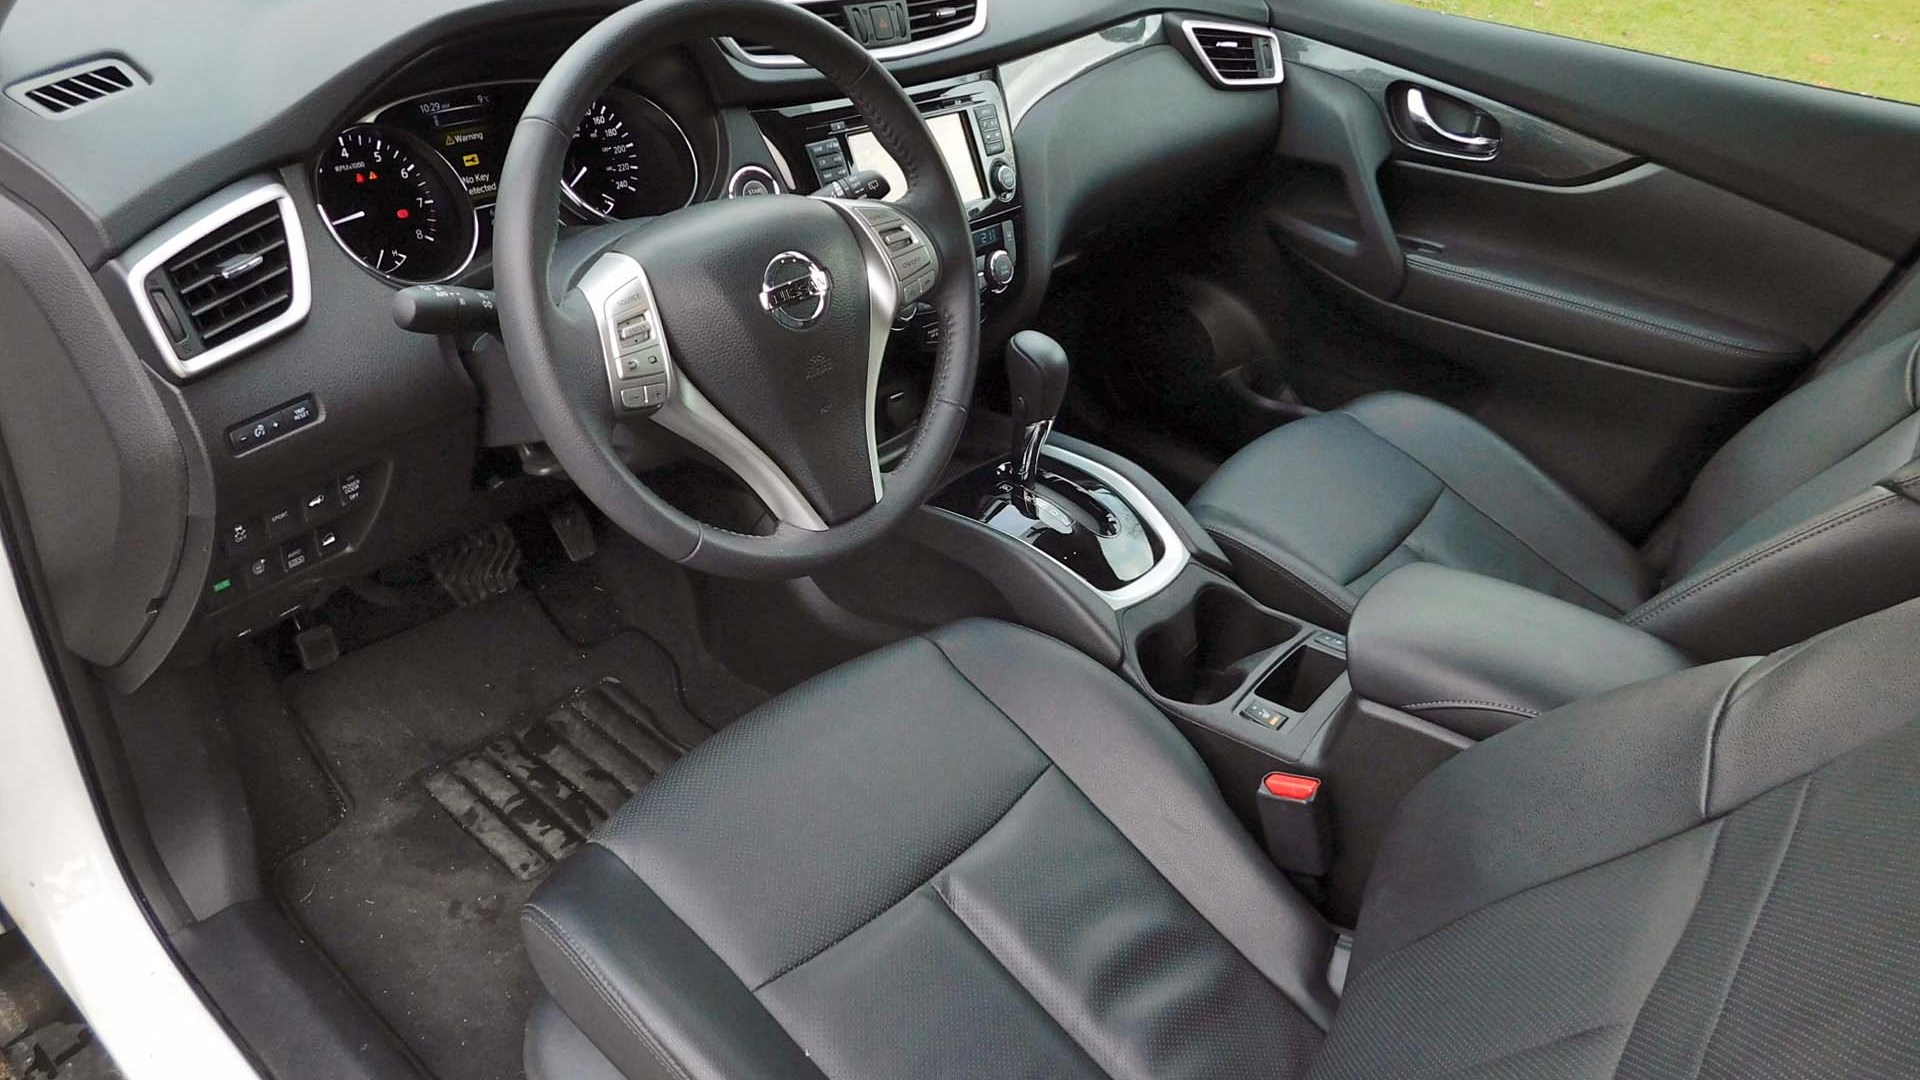 2016 Nissan Rogue SL Premium Test Drive Review | AutoTrader.ca